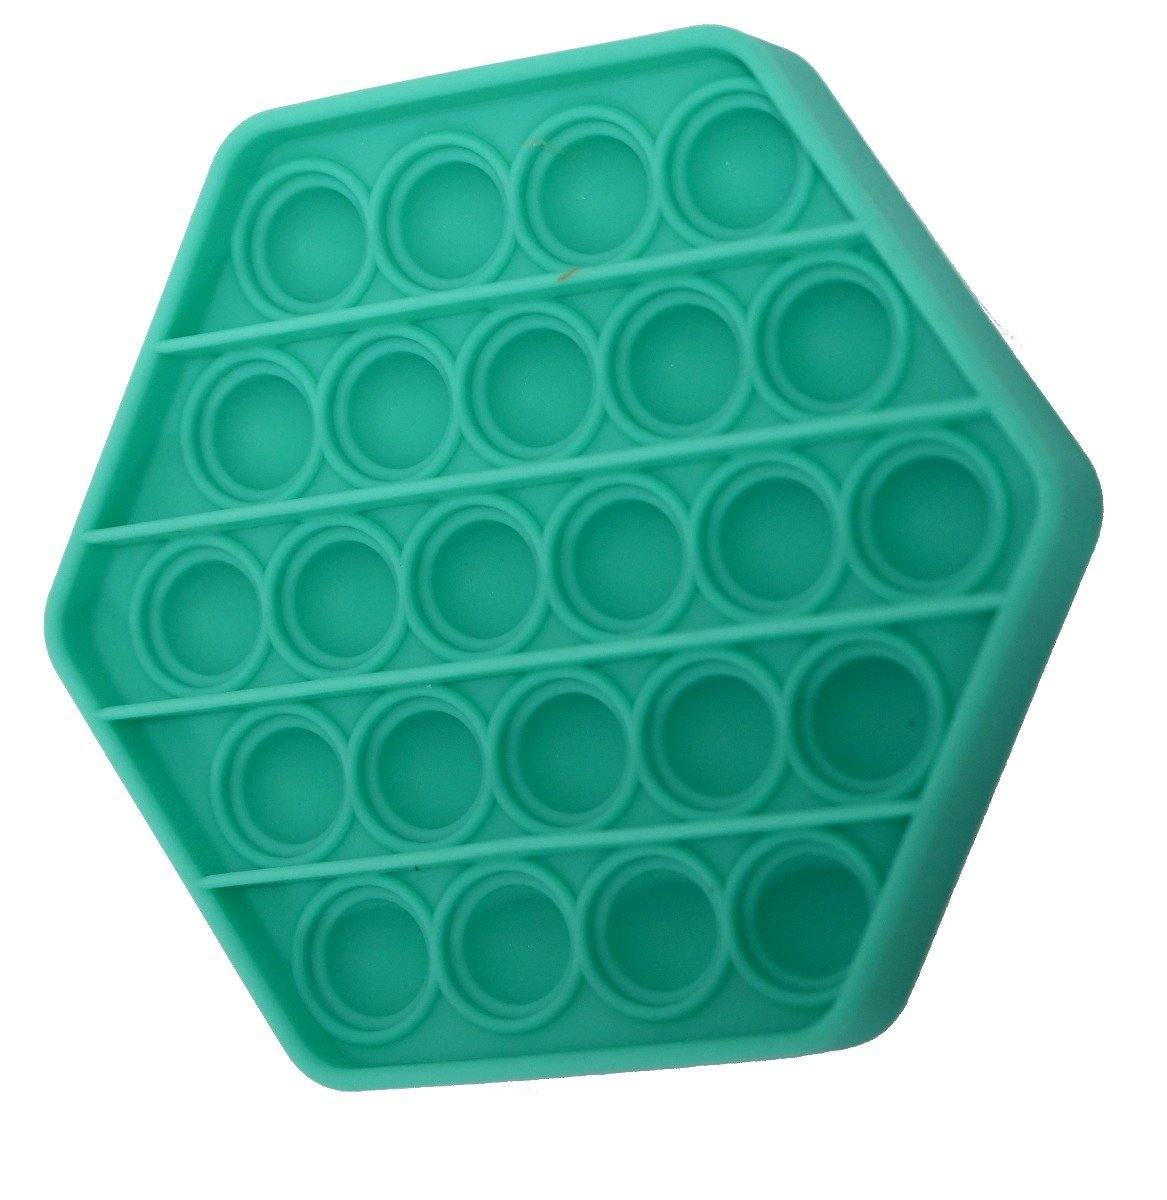 Hexagon Pop It Toy